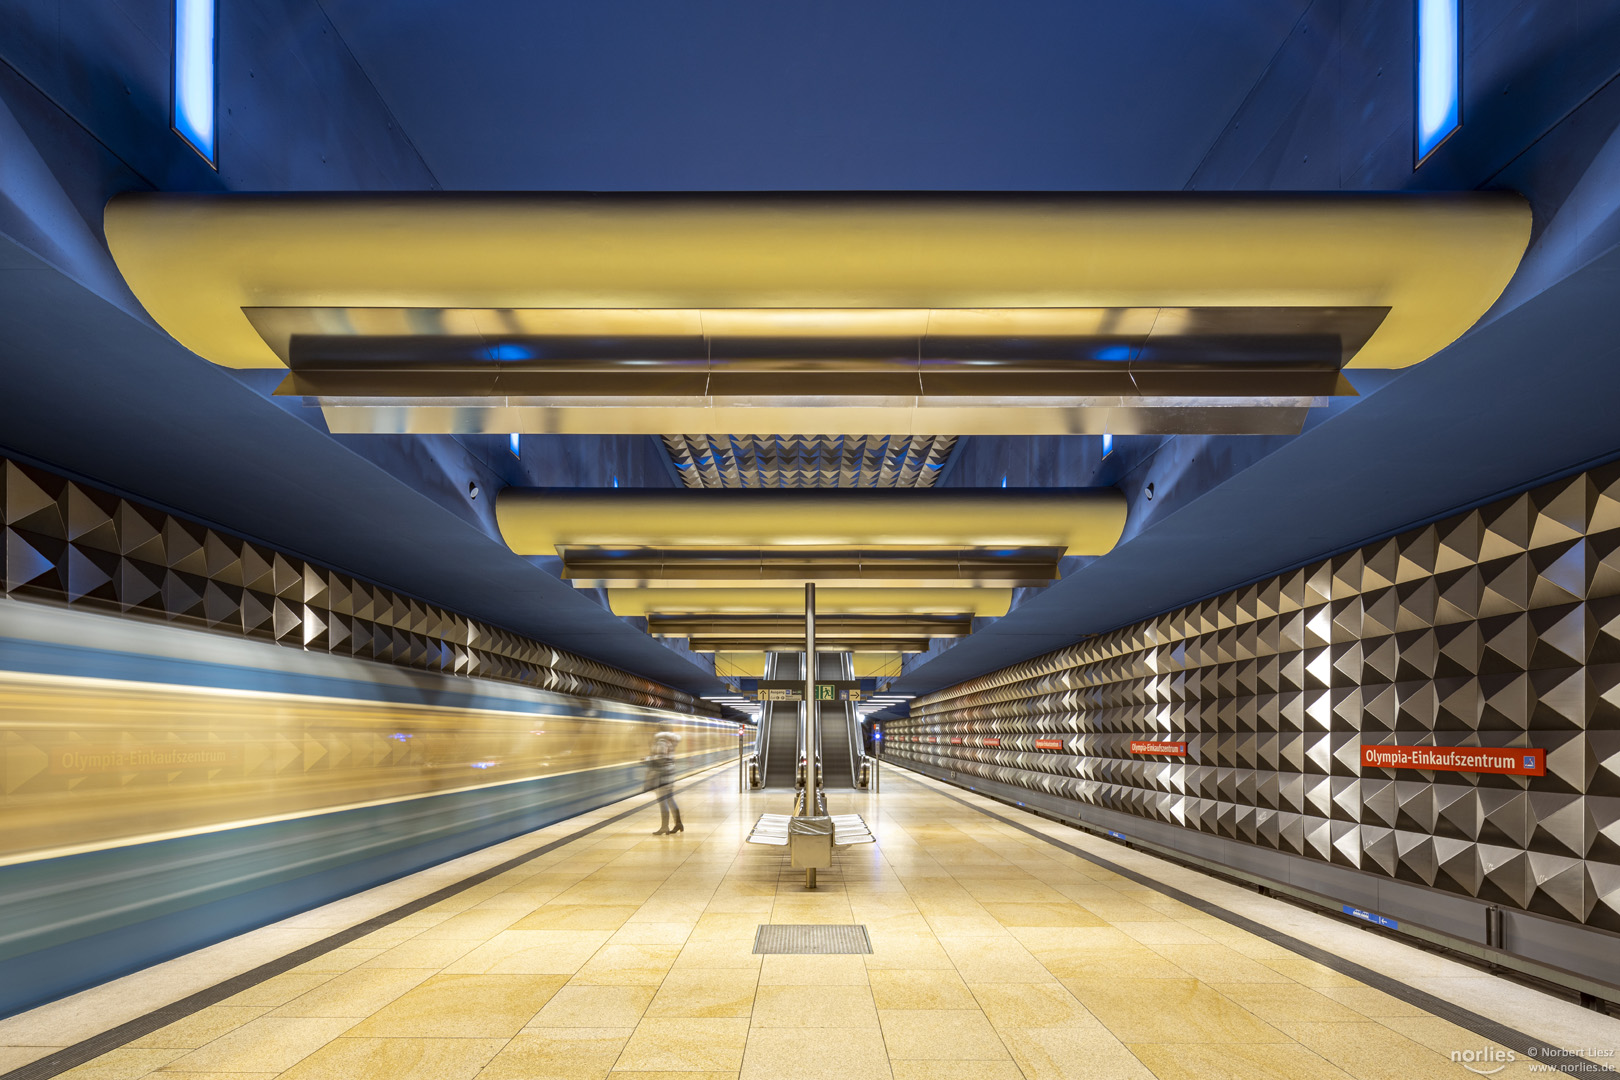 U-Bahn Olympia-Einkaufszentrum